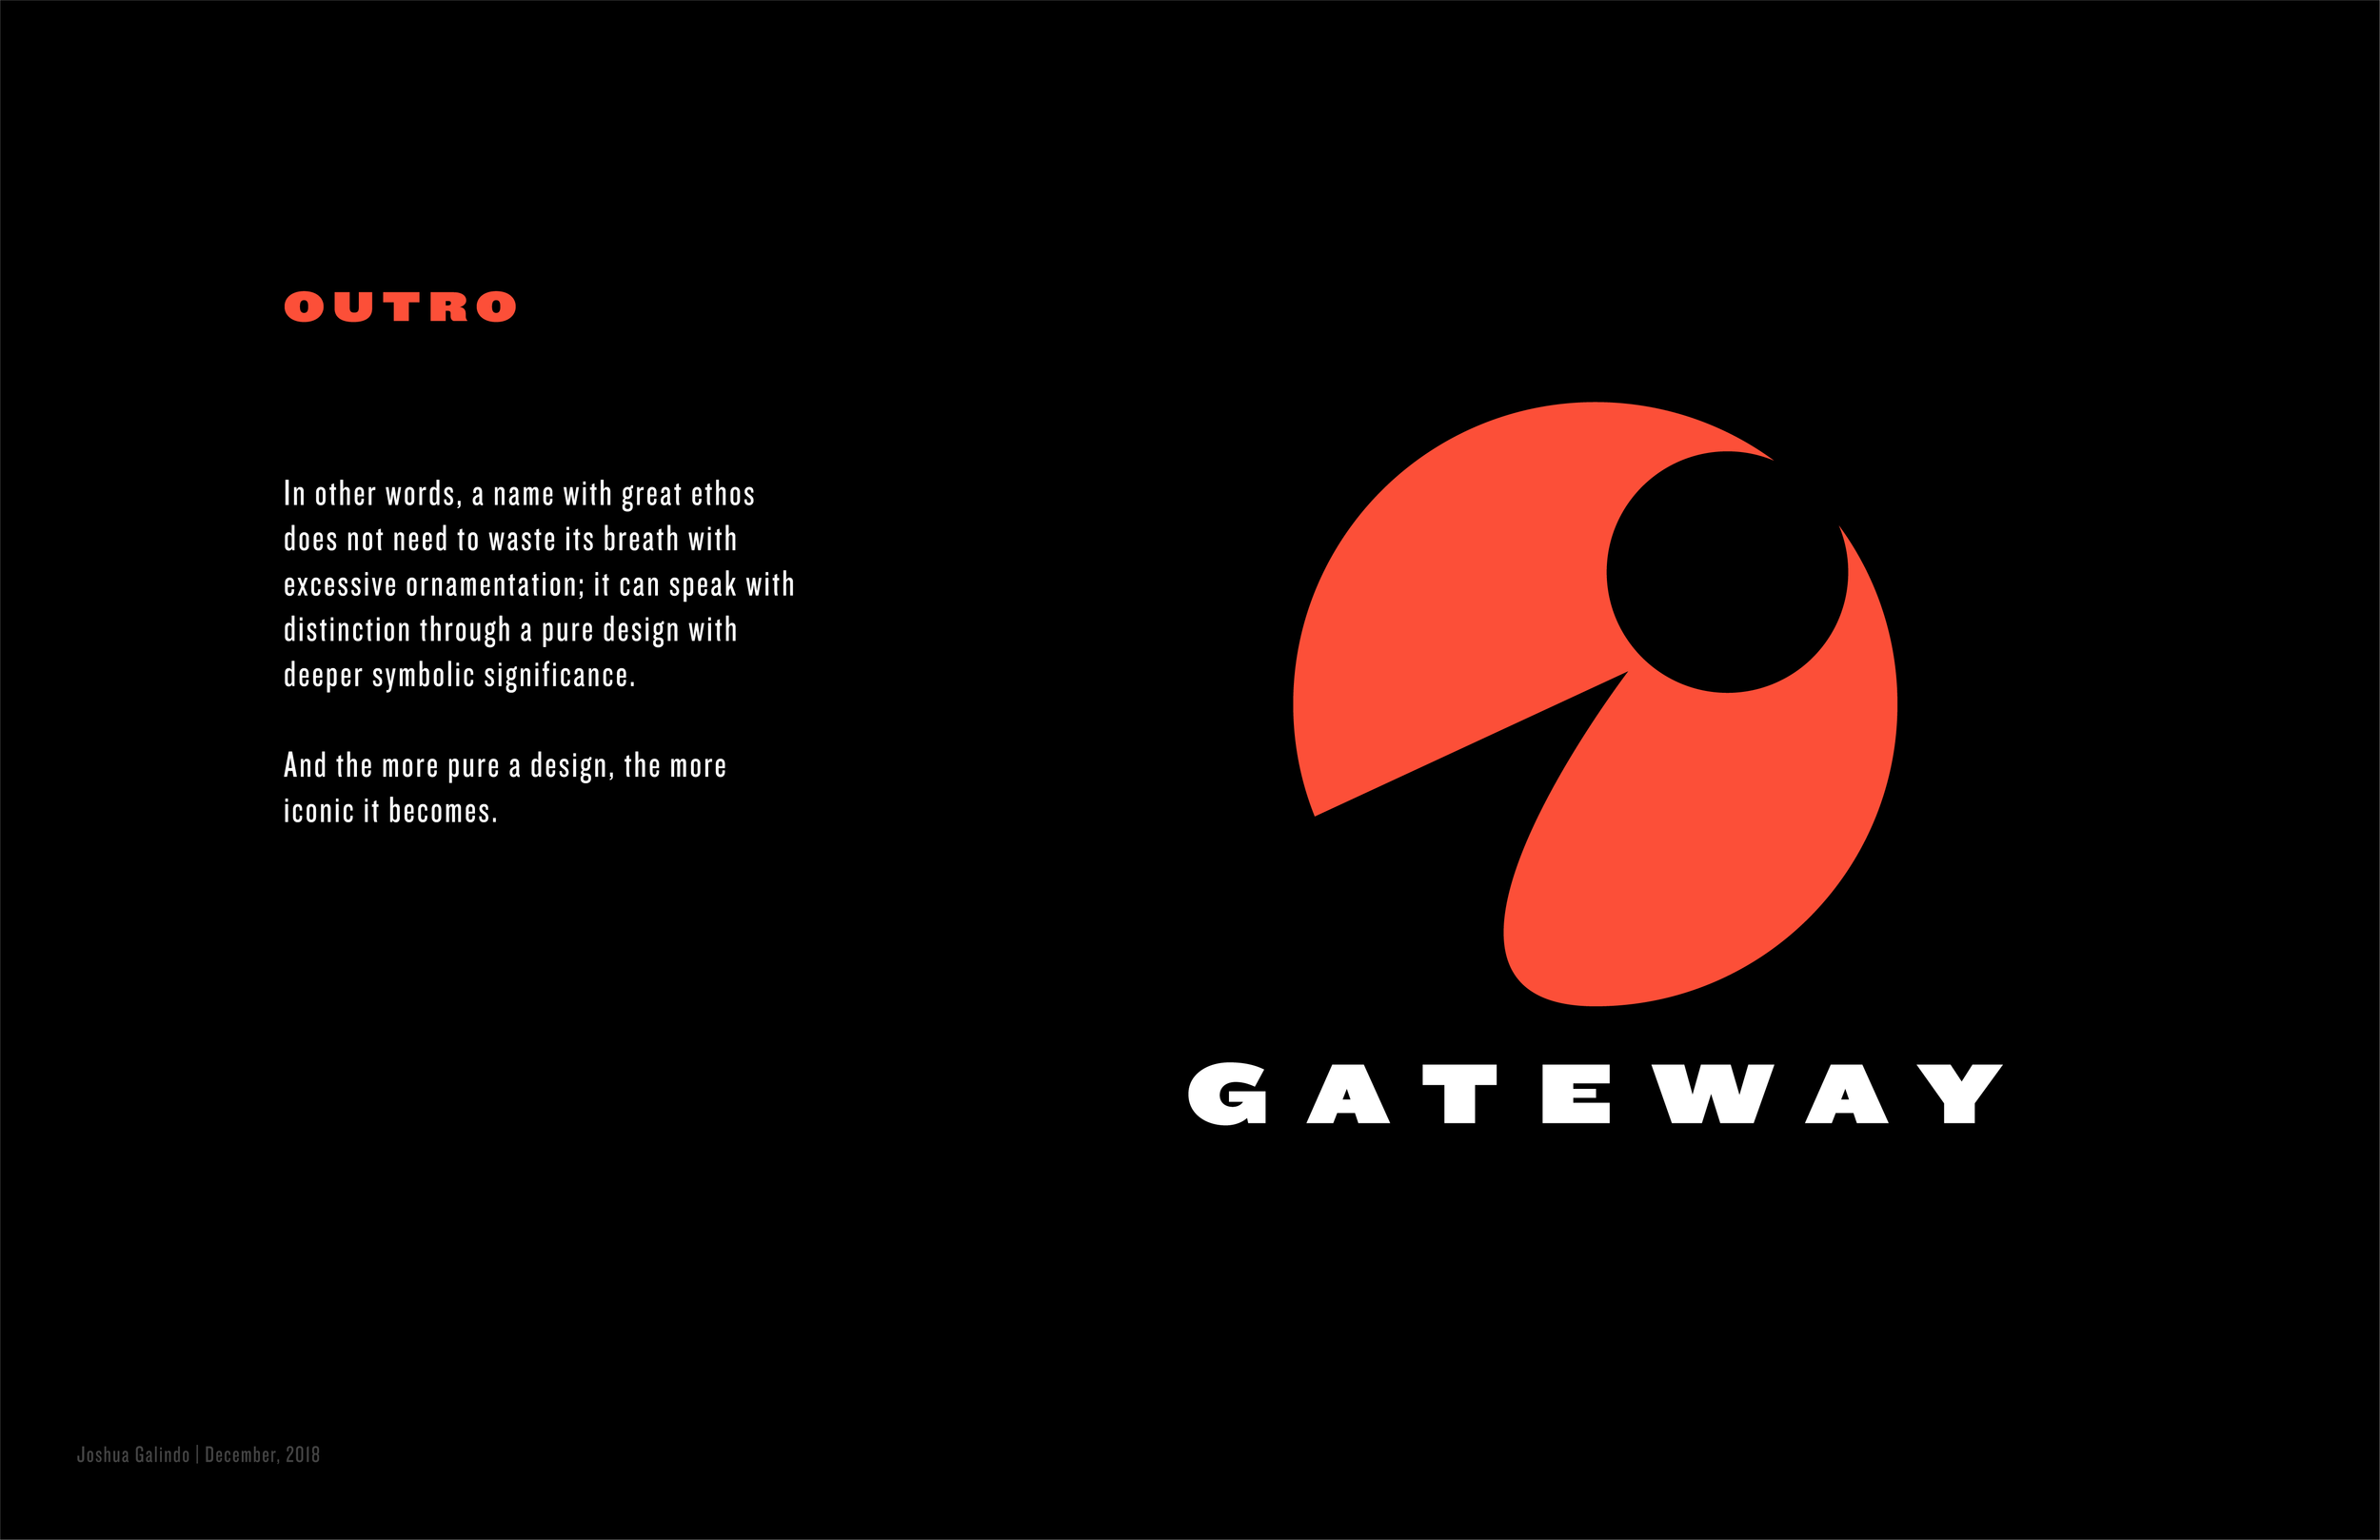 GatewayLogo_Info__JoshuaGalindo_01-17.png